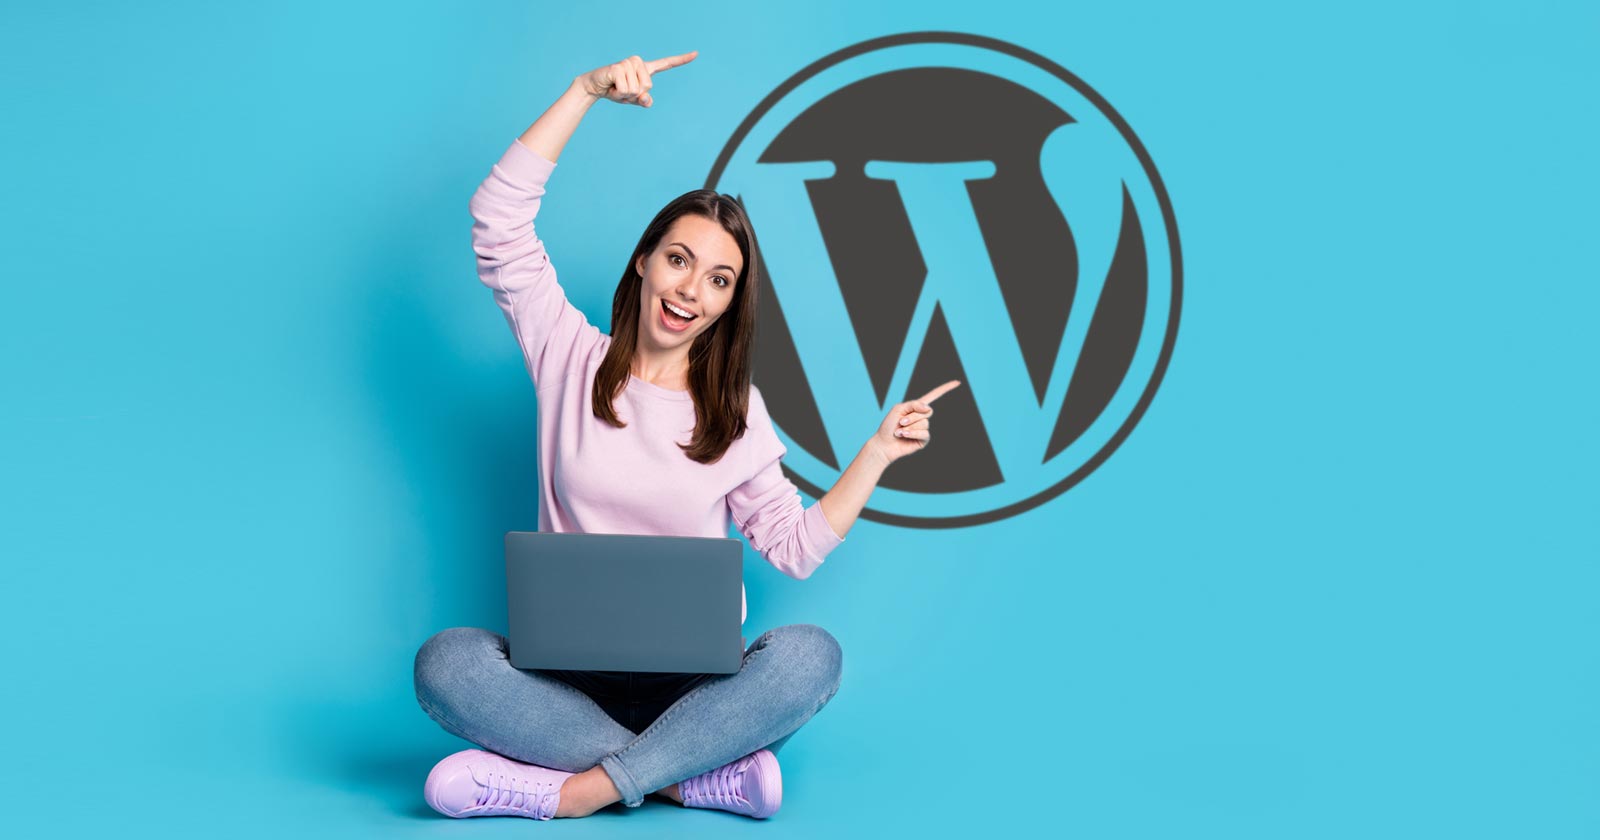 Desenvolvimento de Sites Wordpress